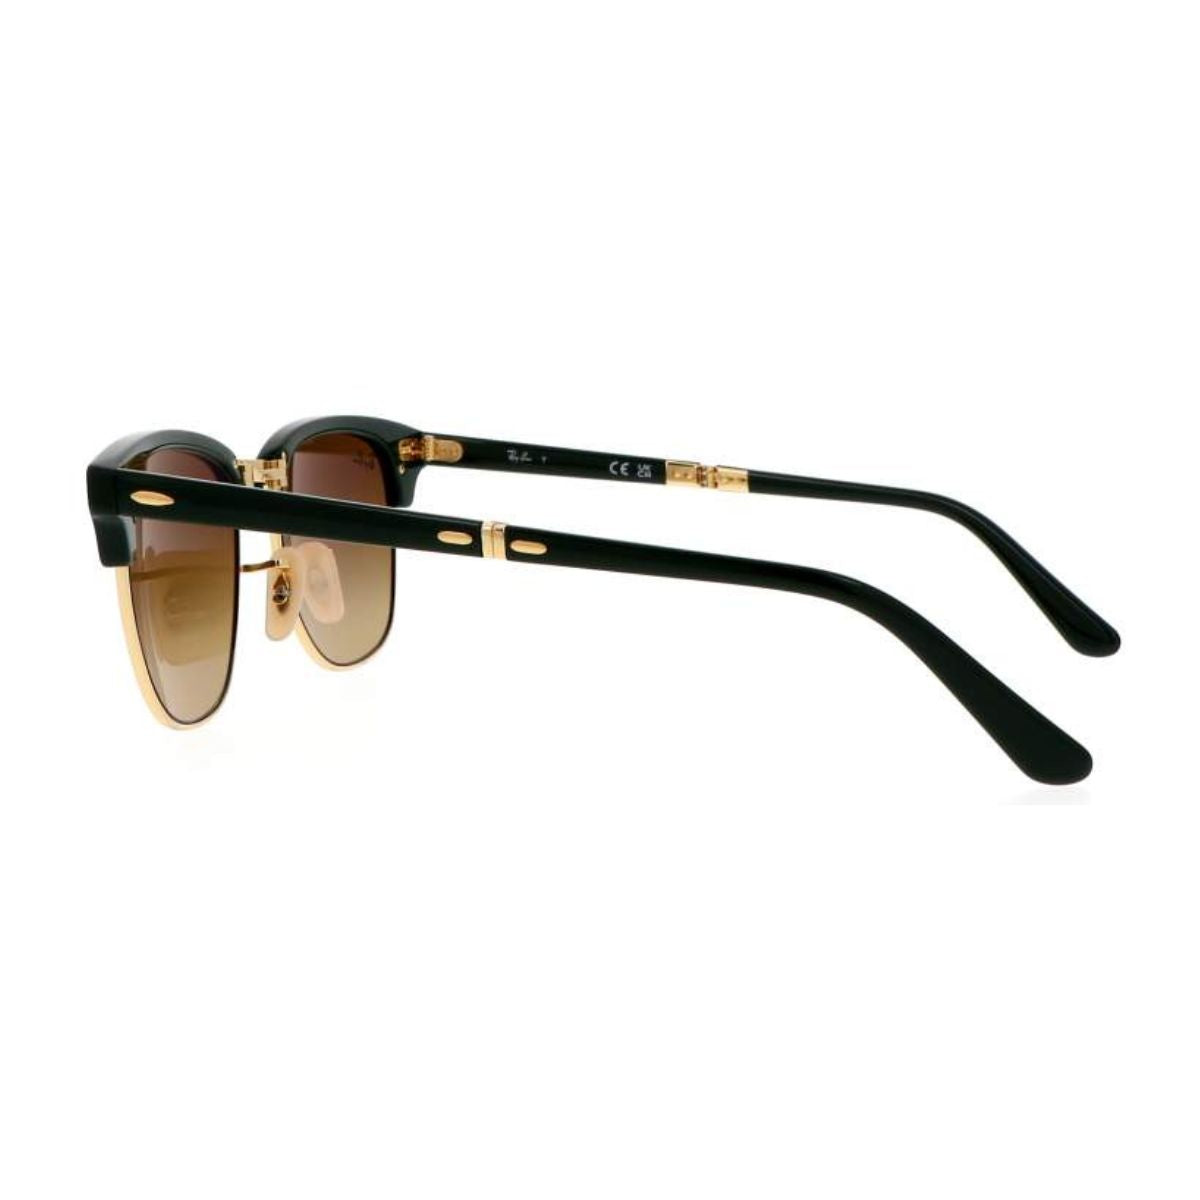 "Ray Ban 2176 1368/85 UV Protected Eyewear Sunglasses For Men And Women At Optorium"